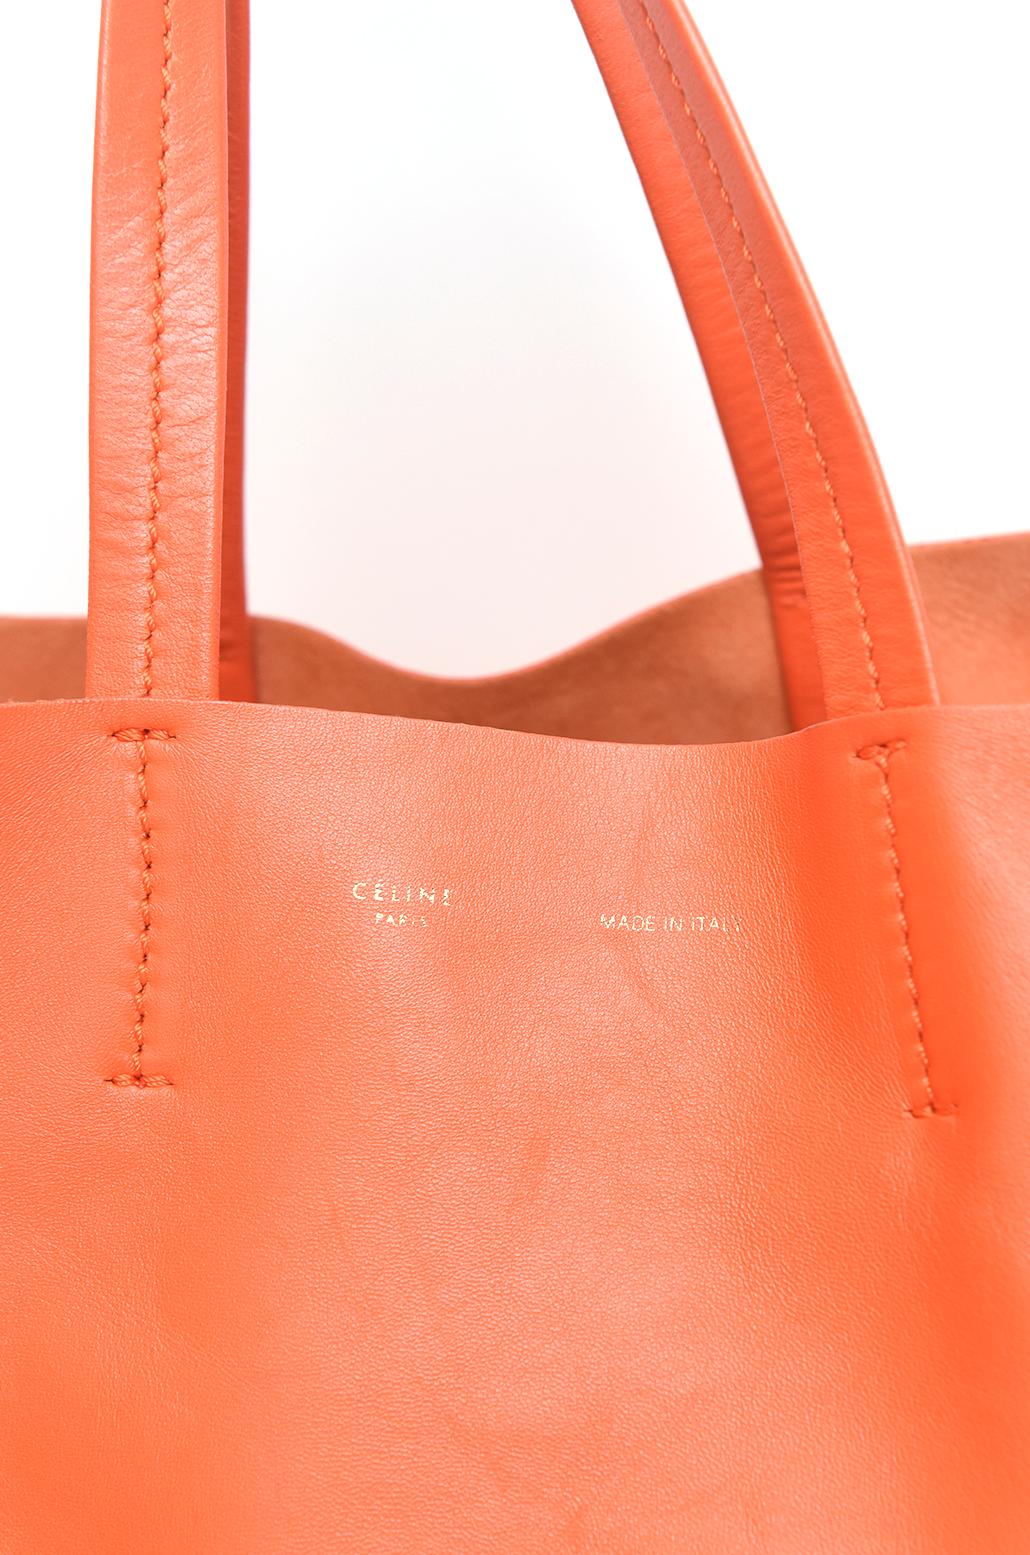 Women's Celine Orange Leather Cabas Tote Bag